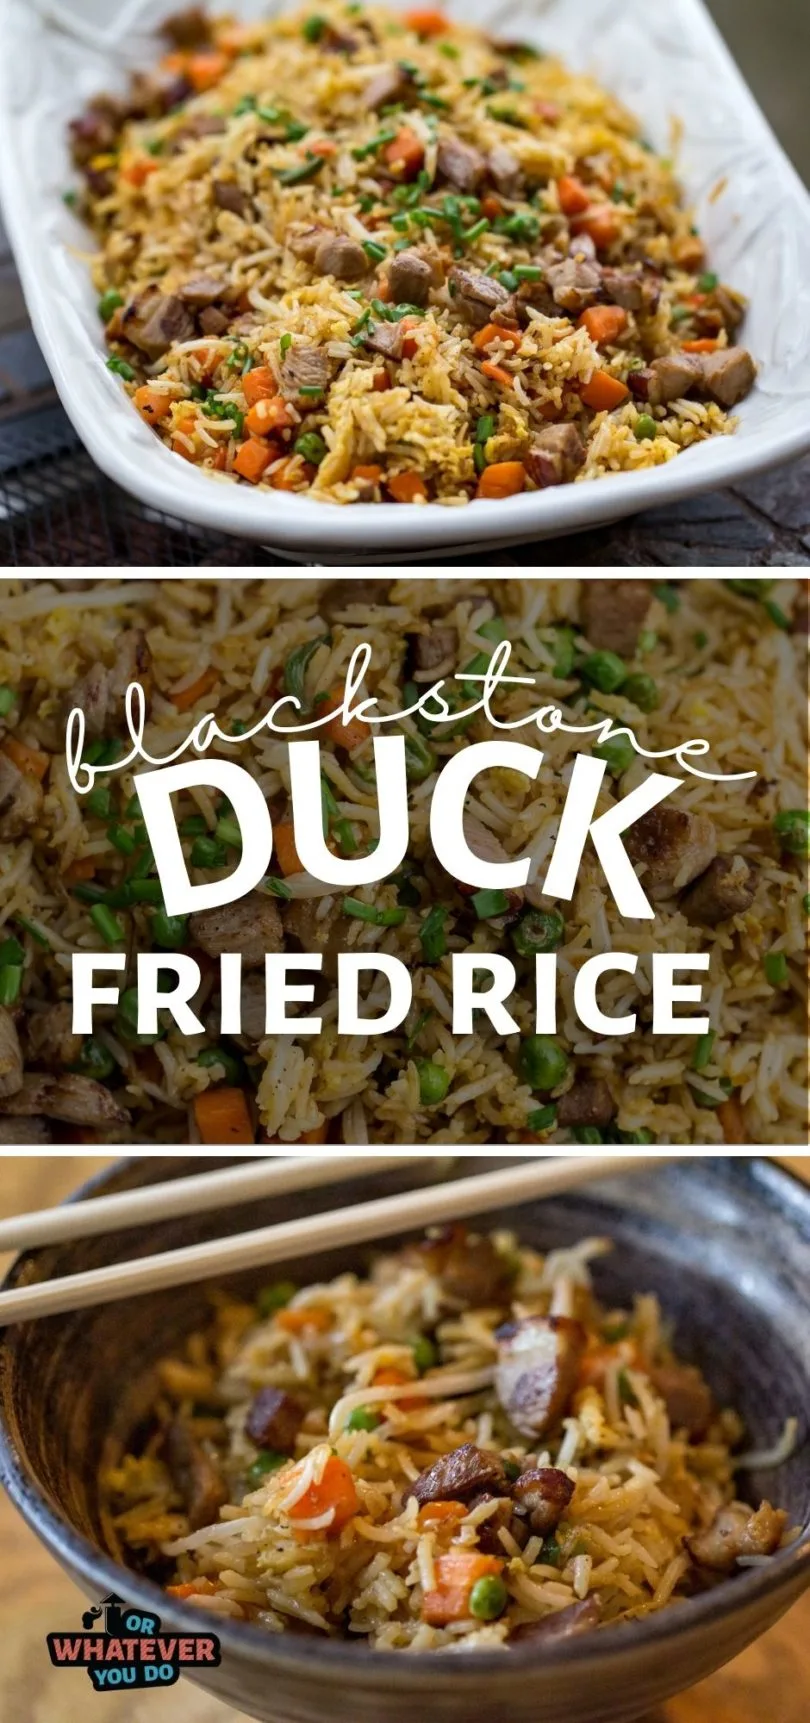 Blackstone Duck Fried Rice